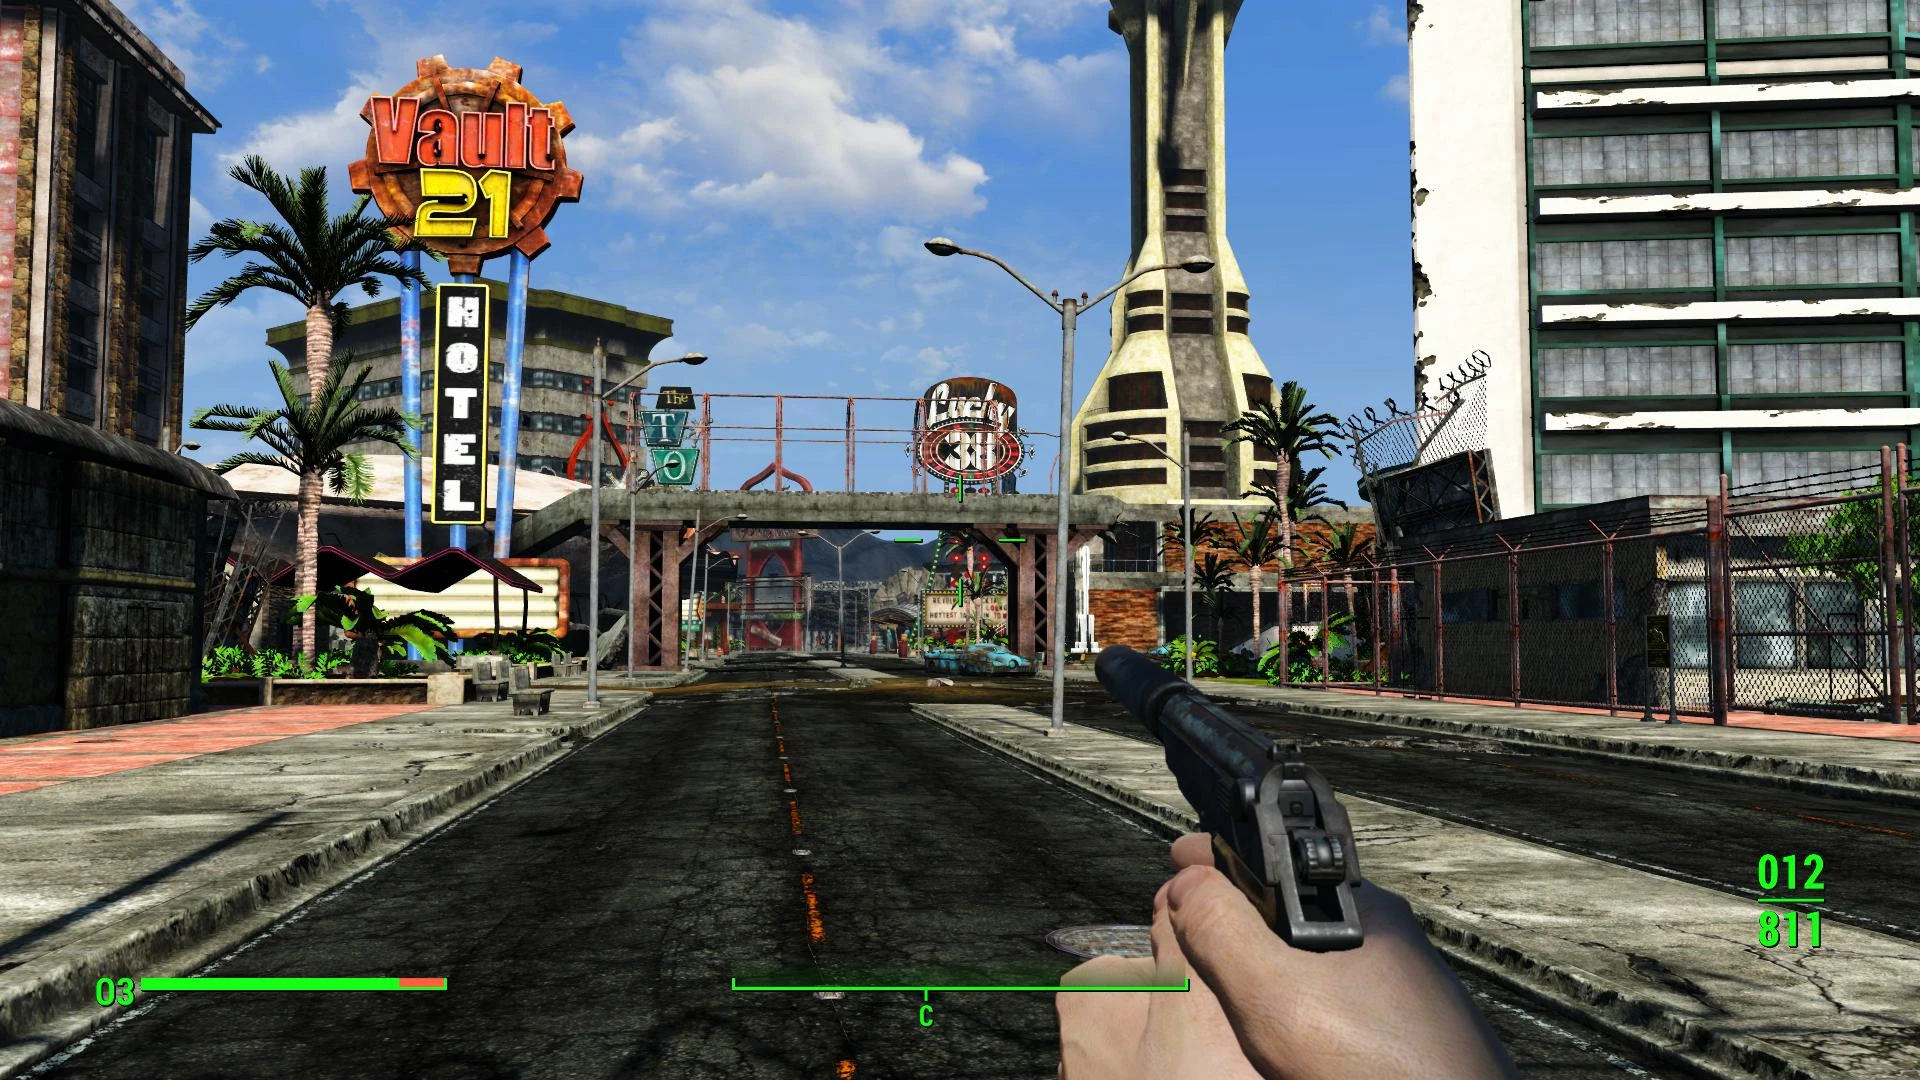 Fallout 4 New Vegas